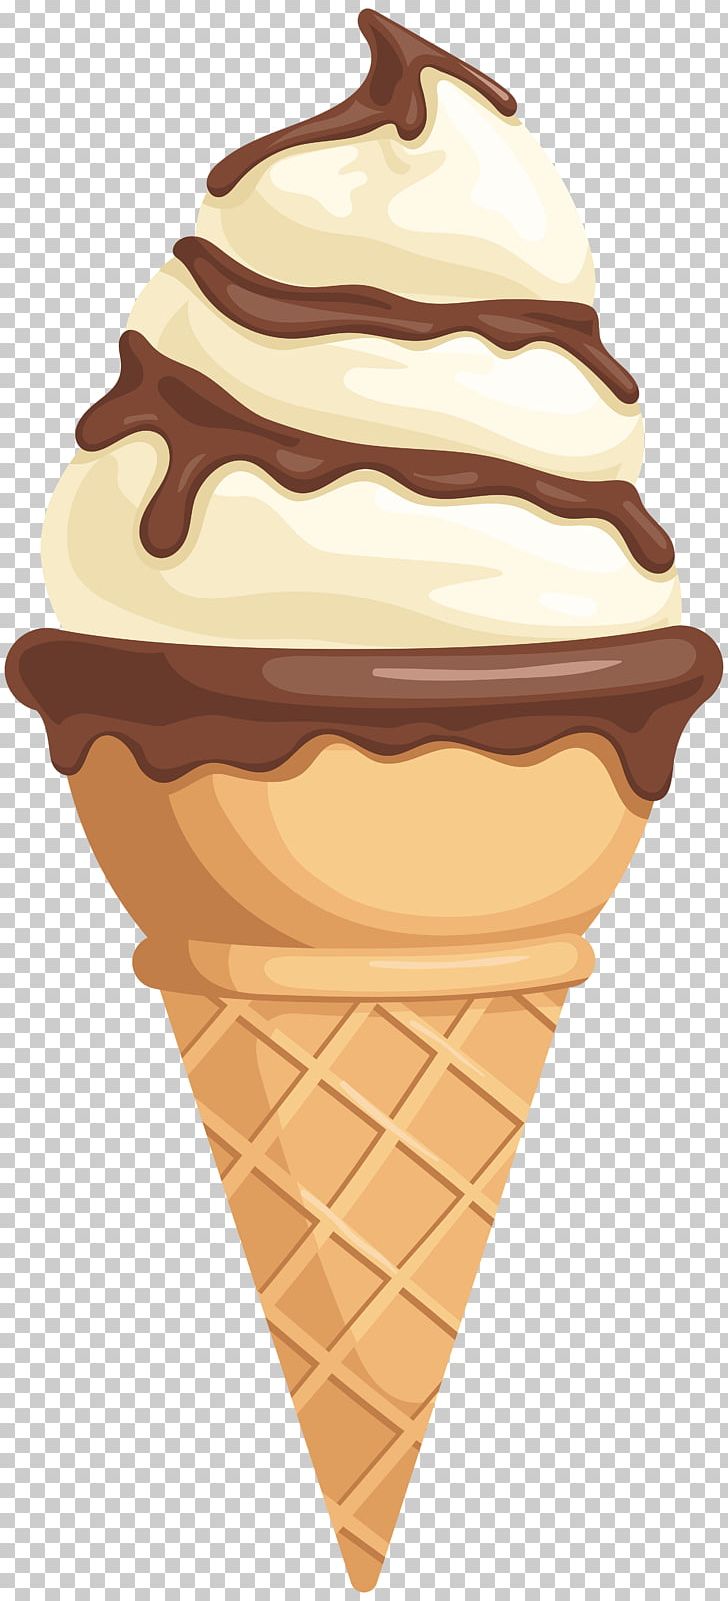 Ice Cream Cones Chocolate Ice Cream Snow Cone PNG, Clipart, Chocolate, Chocolate Ice Cream, Computer Icons, Cream, Dairy Product Free PNG Download